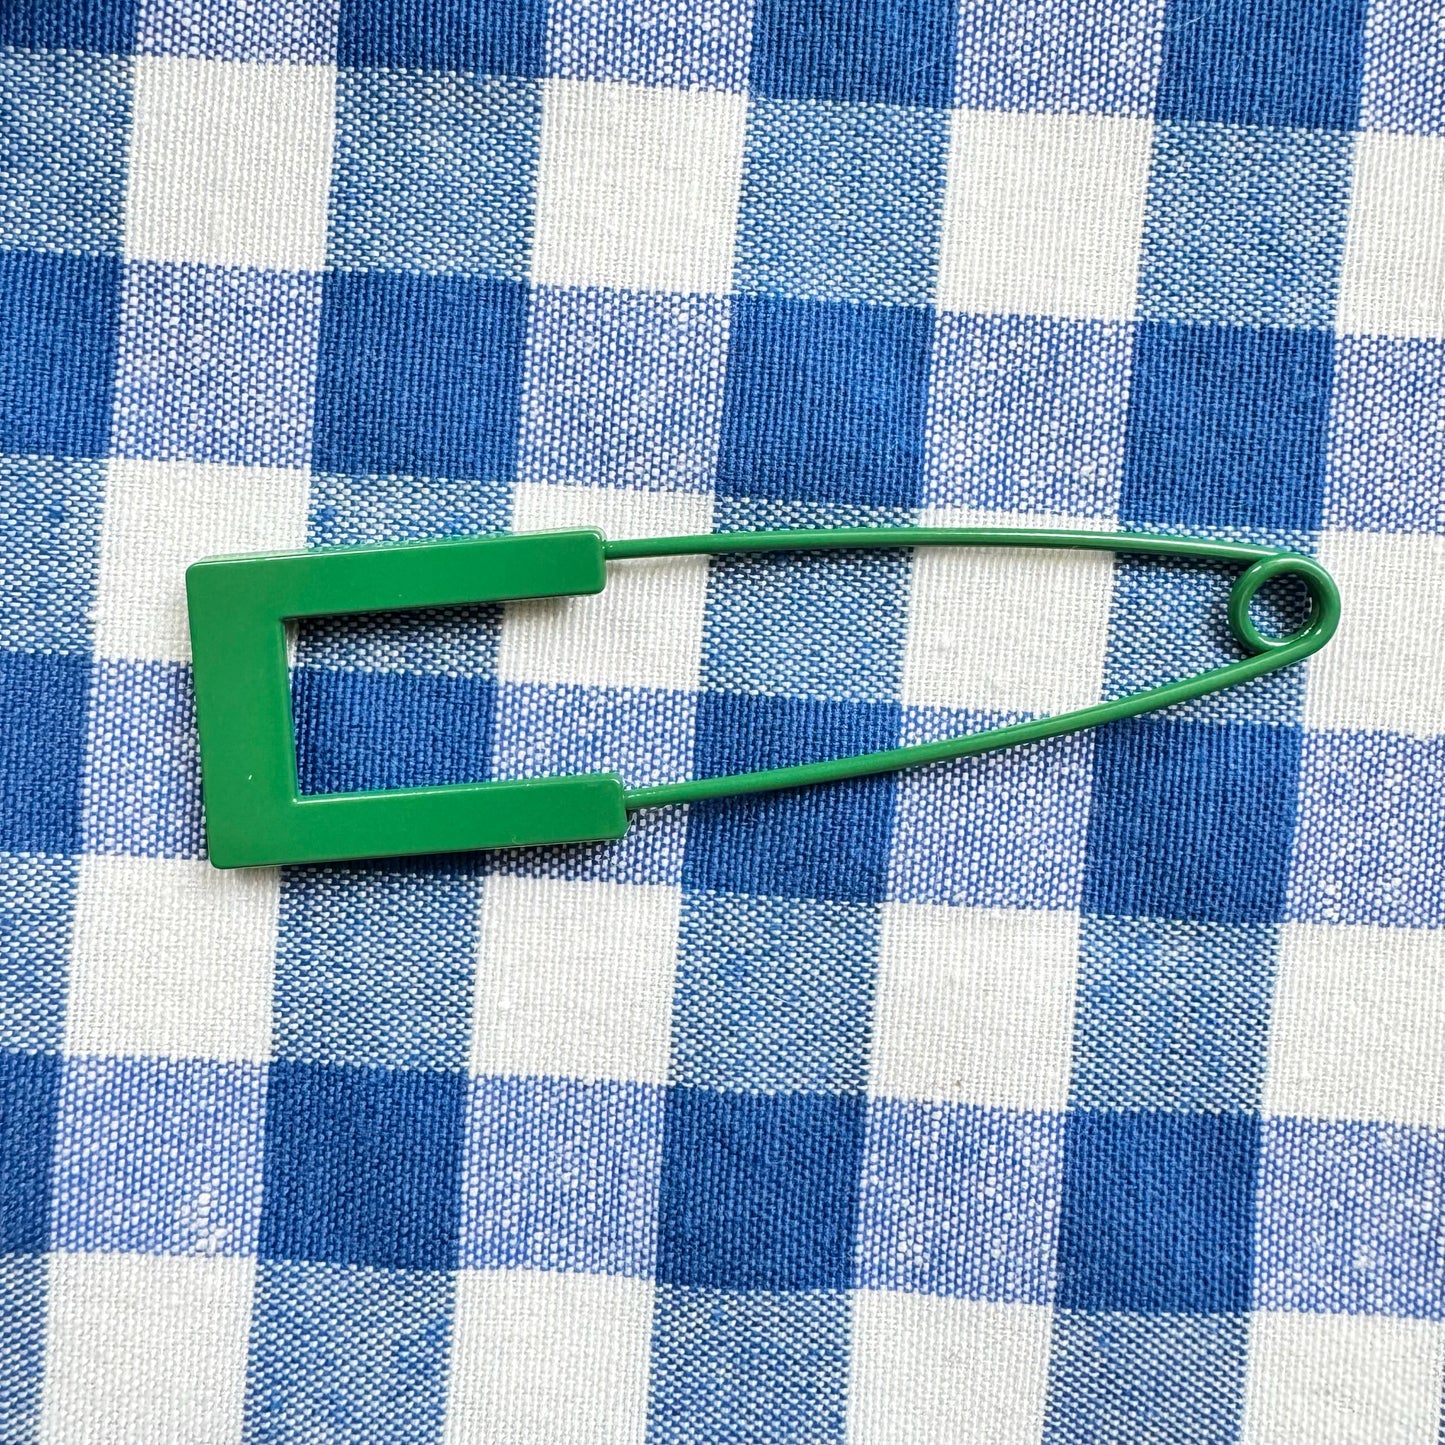 Shawl Pin - Green